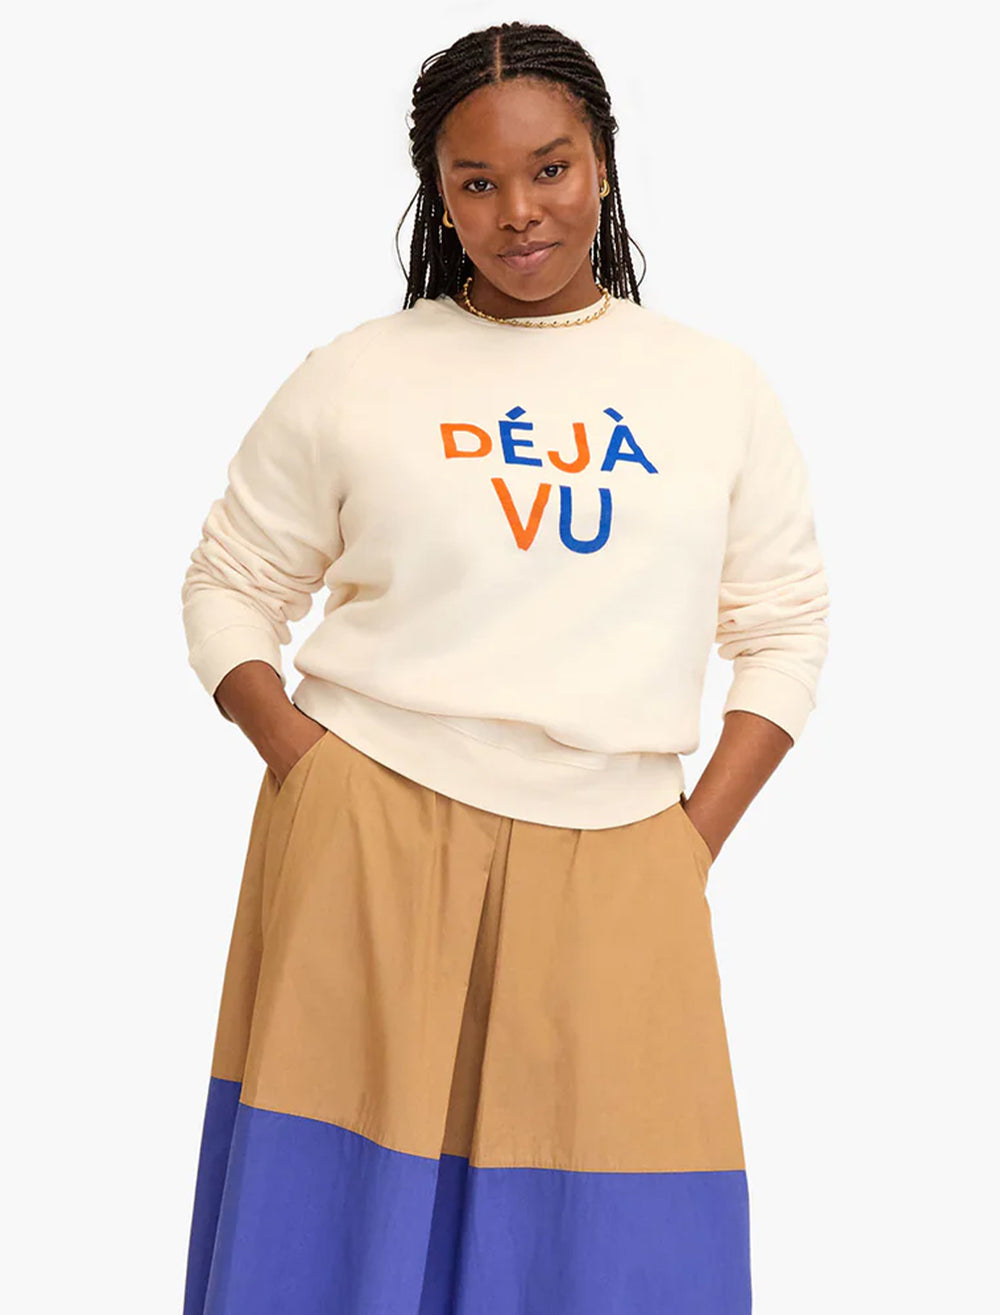 Model wearing Clare V.'s deja vu sweatshirt.